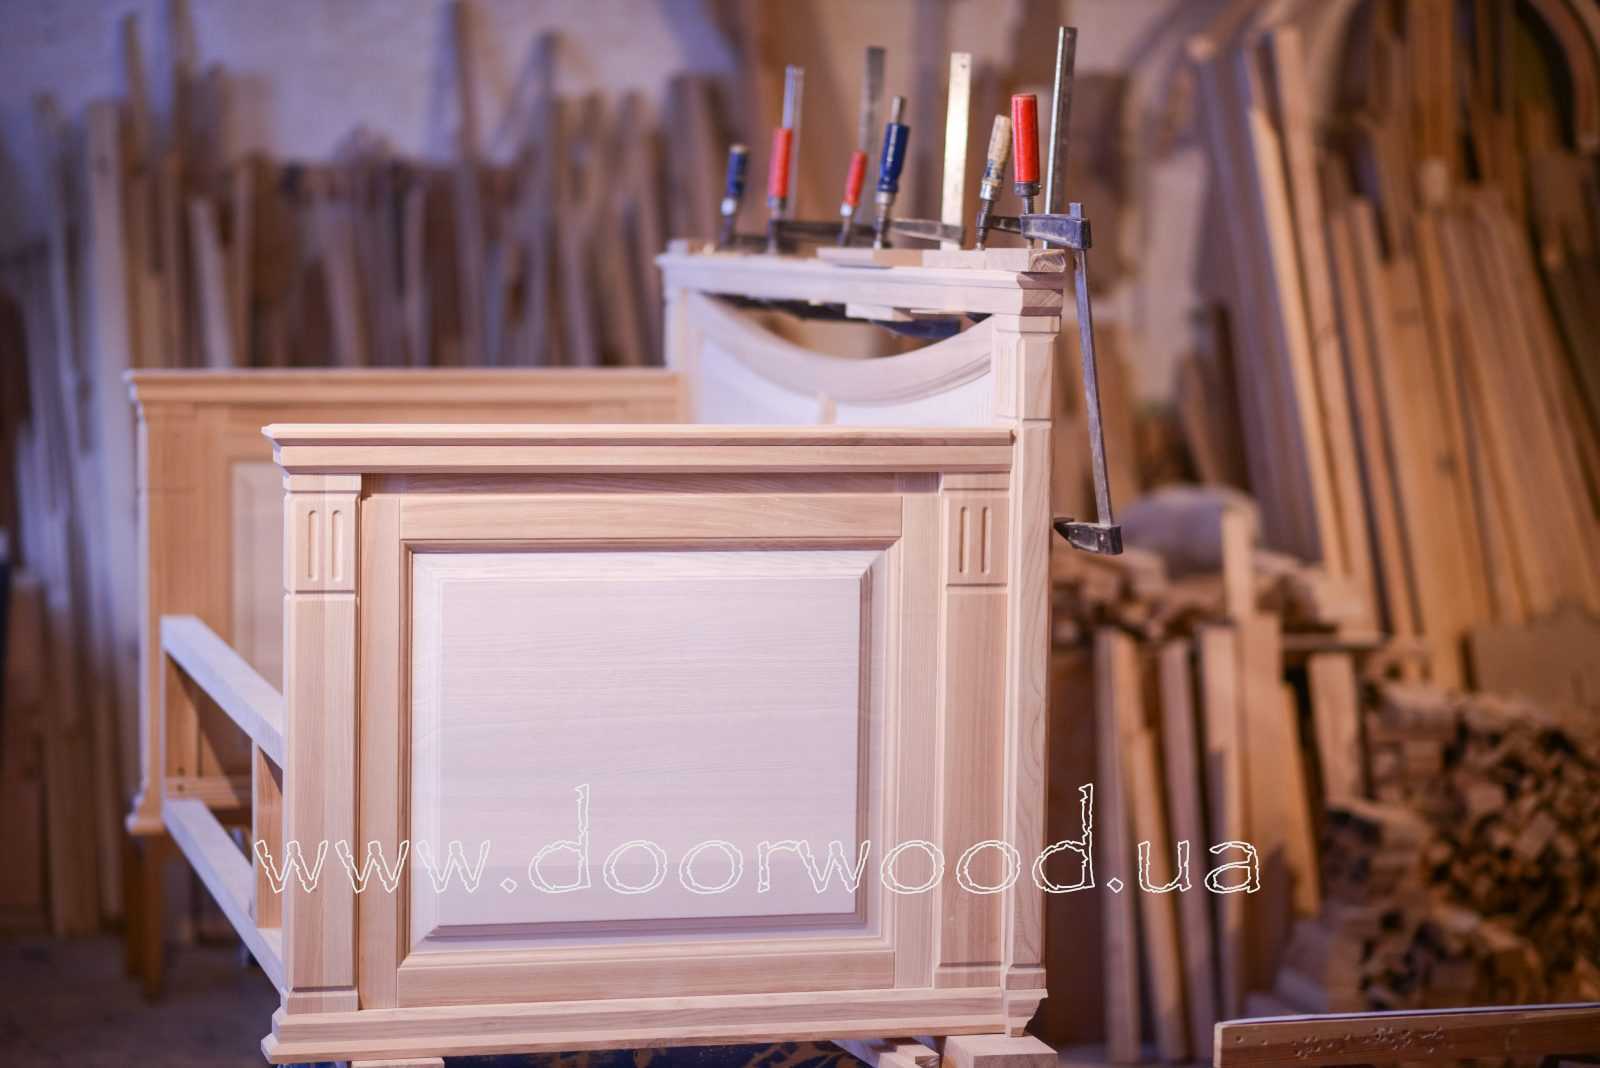 carpentry, wood furniture, cot made of wood.doorwood